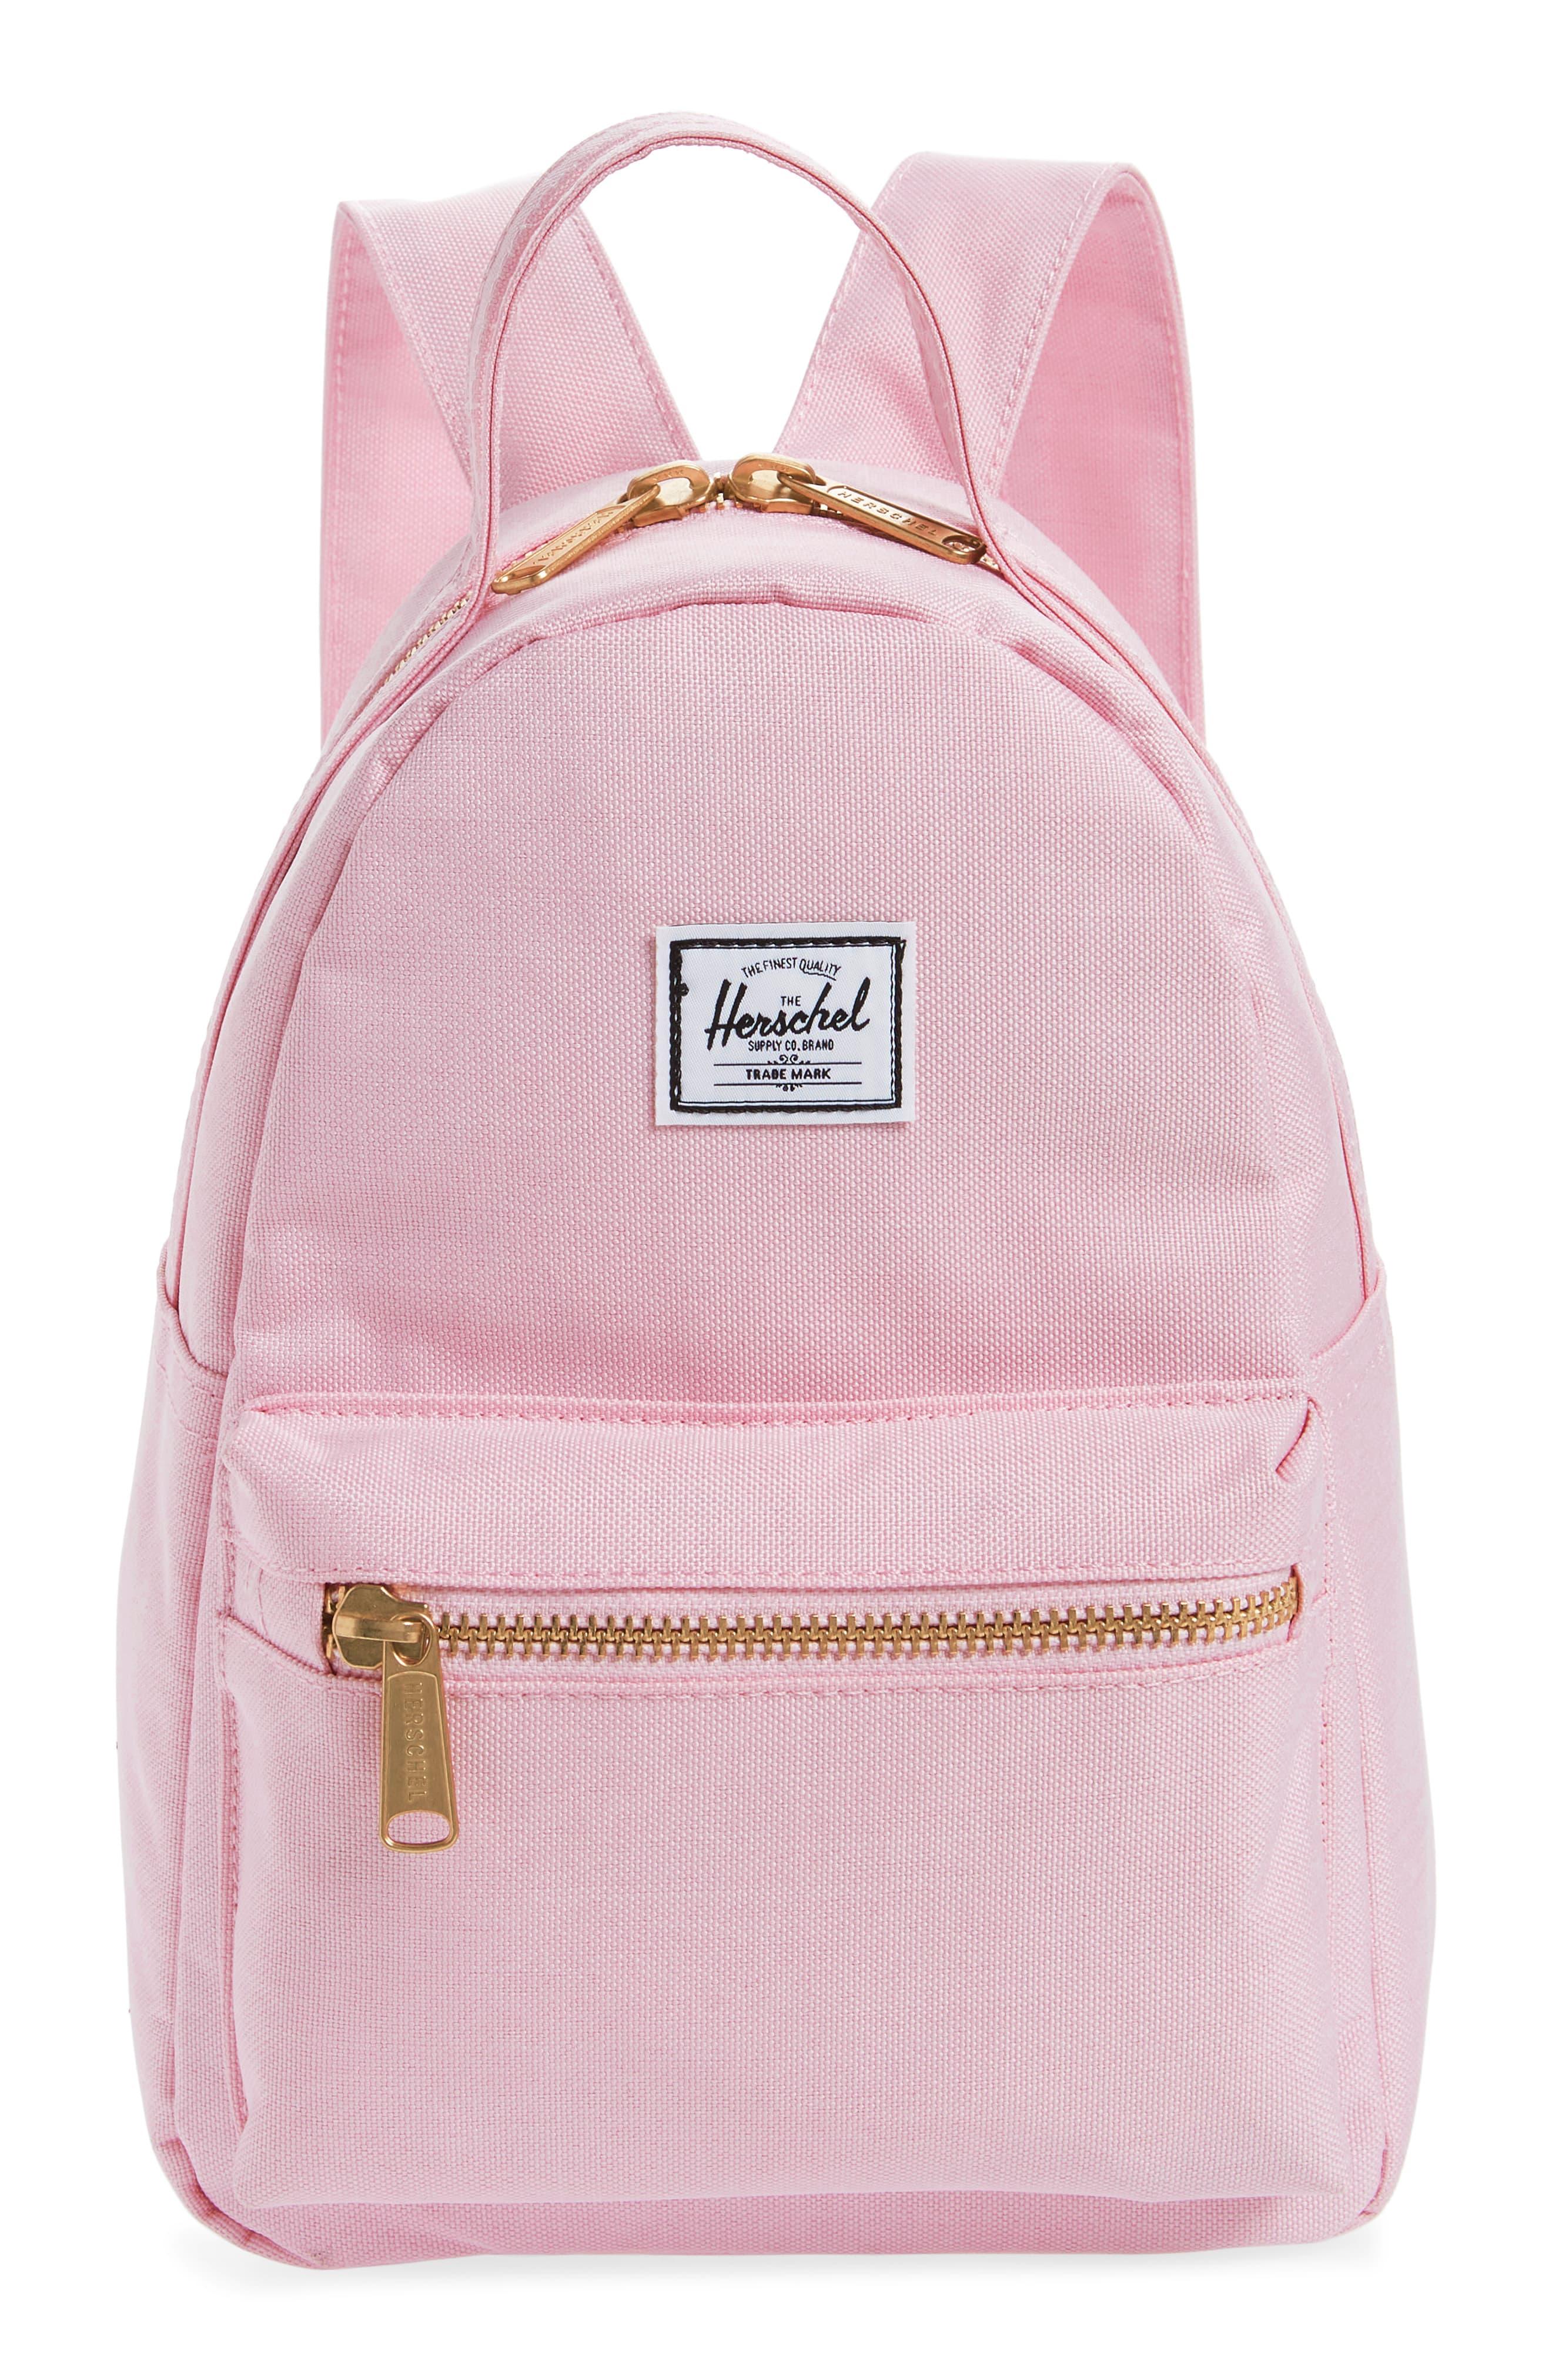 Herschel Supply Co. Mini Nova Backpack in Pink - Lyst